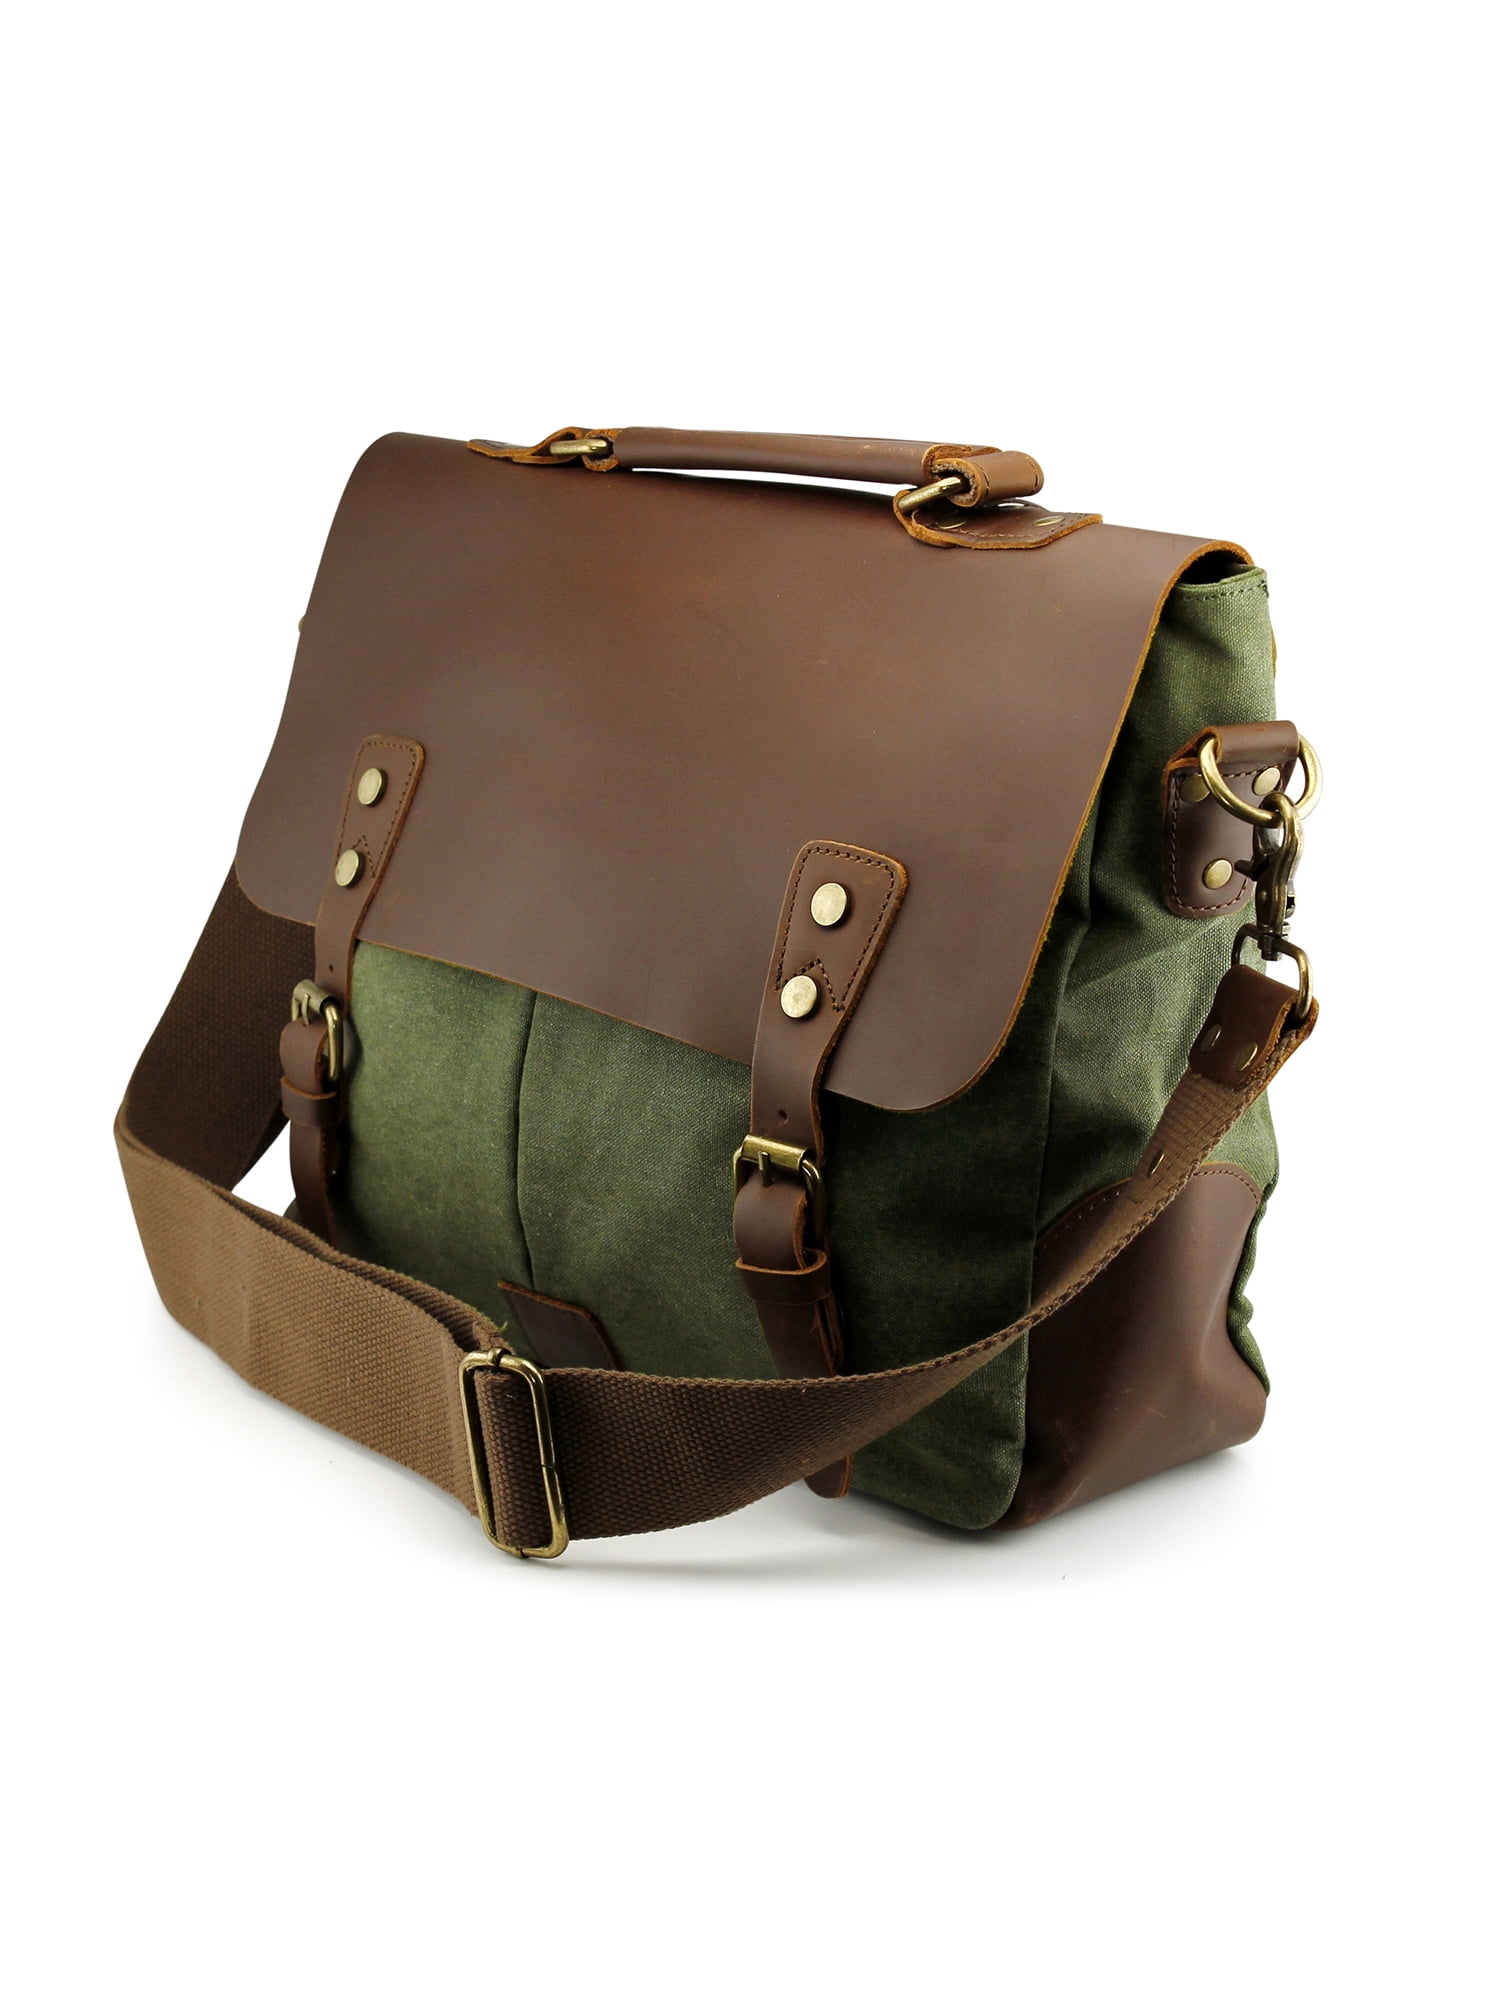 Gearonic Men's Vintage Canvas Leather Satchel School Military Messenger Shoulder Bag Travel Bag - Green